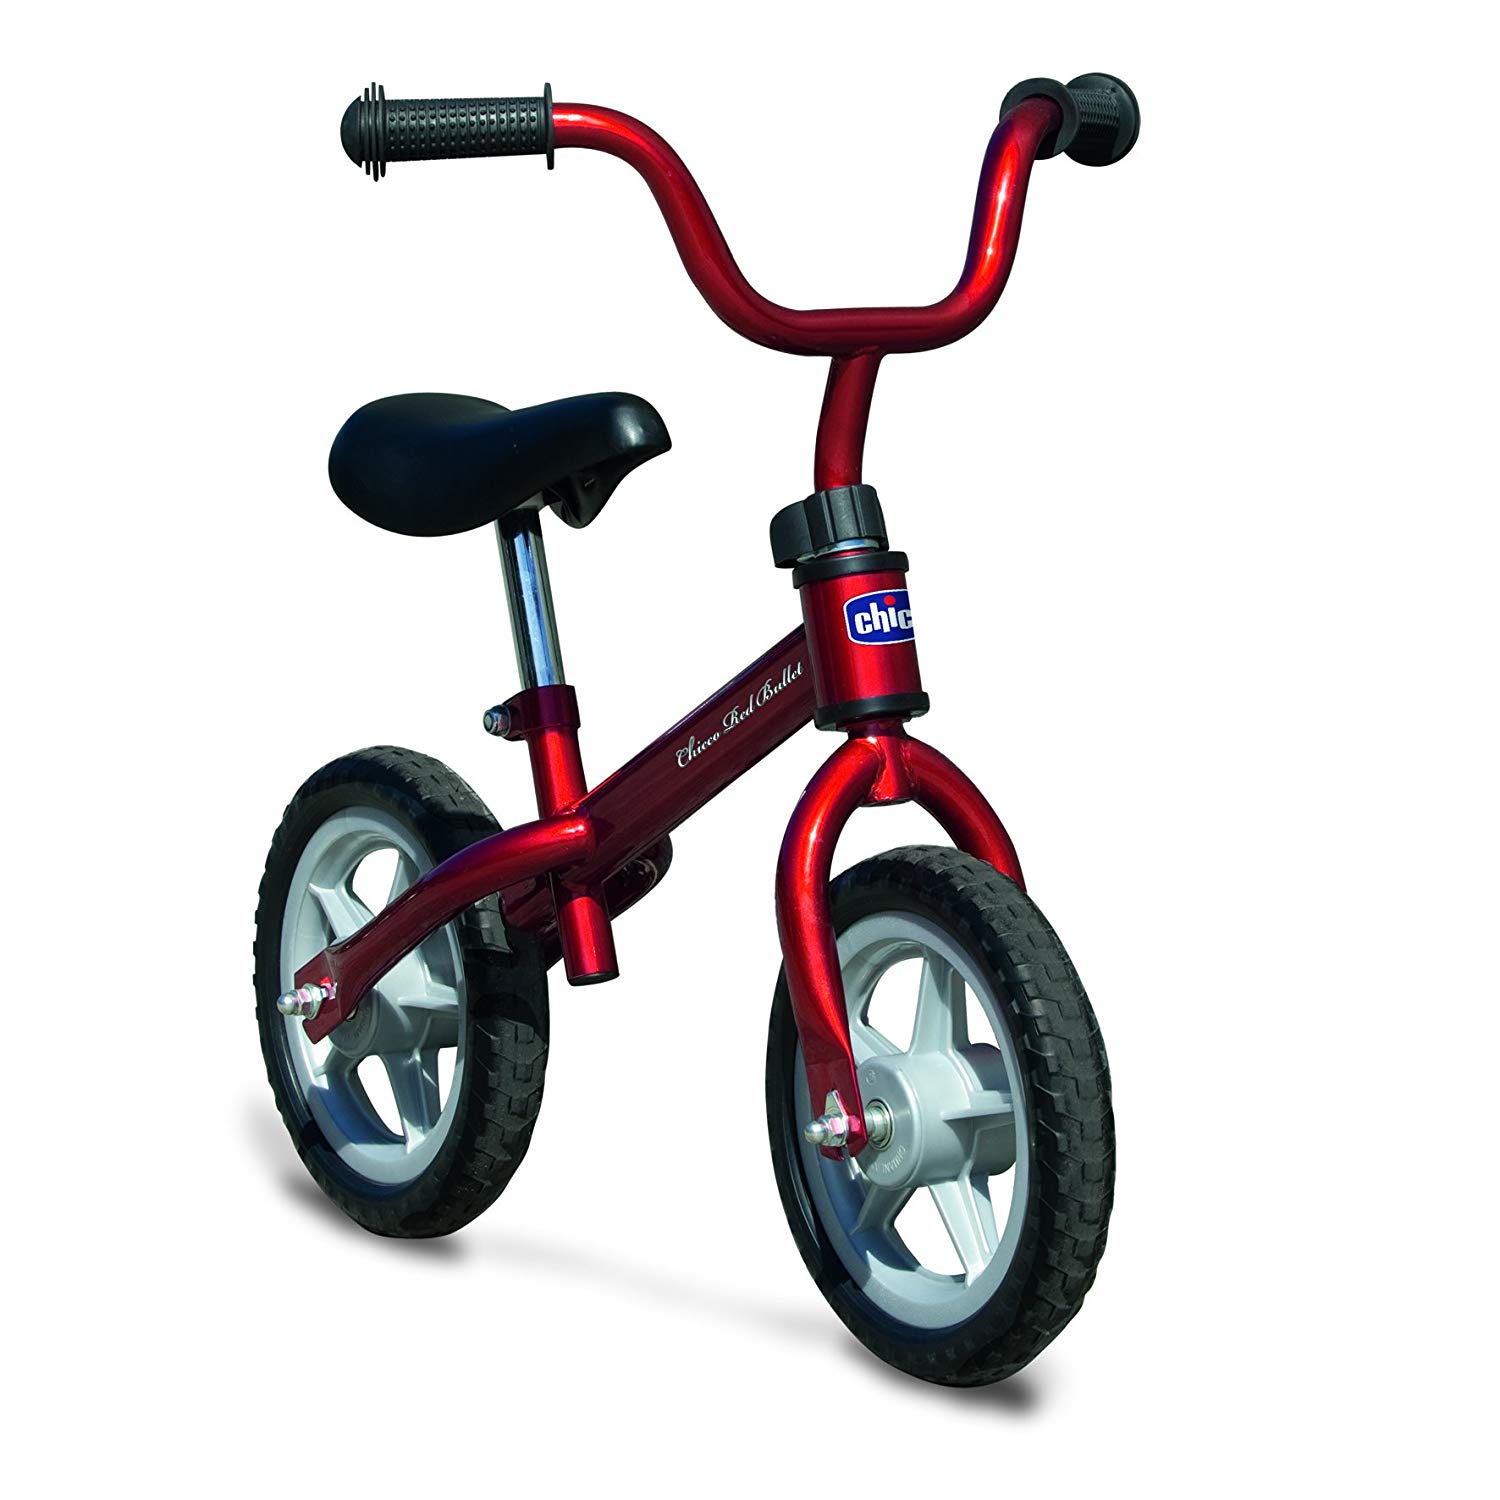 Zeroall 2 en 1 Bicicleta sin Pedales Bicicleta de Equilibrio con Pedales Desmontables,Bicicleta Bebes Correpasillos Baby Balance Bicicleta para Niños/Niñas 10-36 Meses Caminar Indoor|Outdoor 